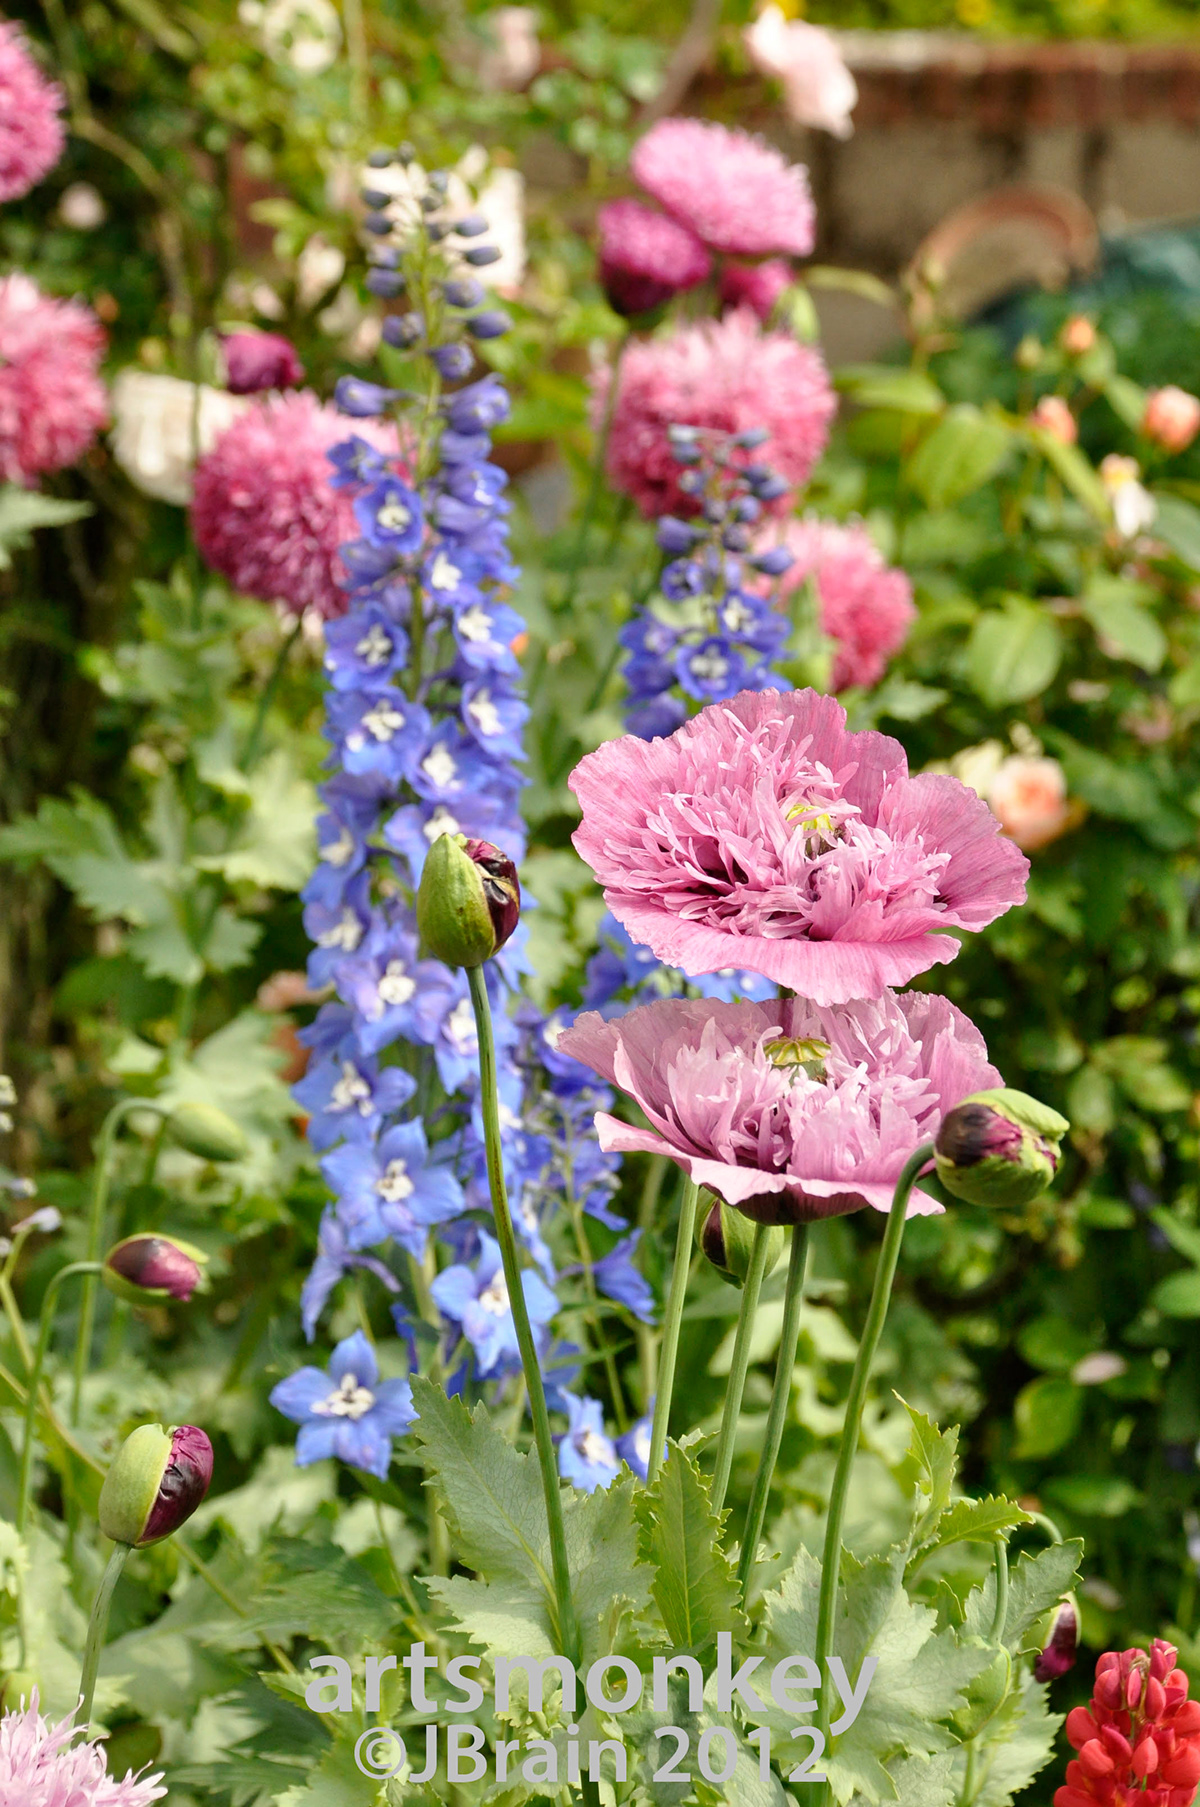 garden  Countryside  cottage   "cottage garden" Artsmonkey JBrain gardening Flowers  roses  "climbing plants" poppies